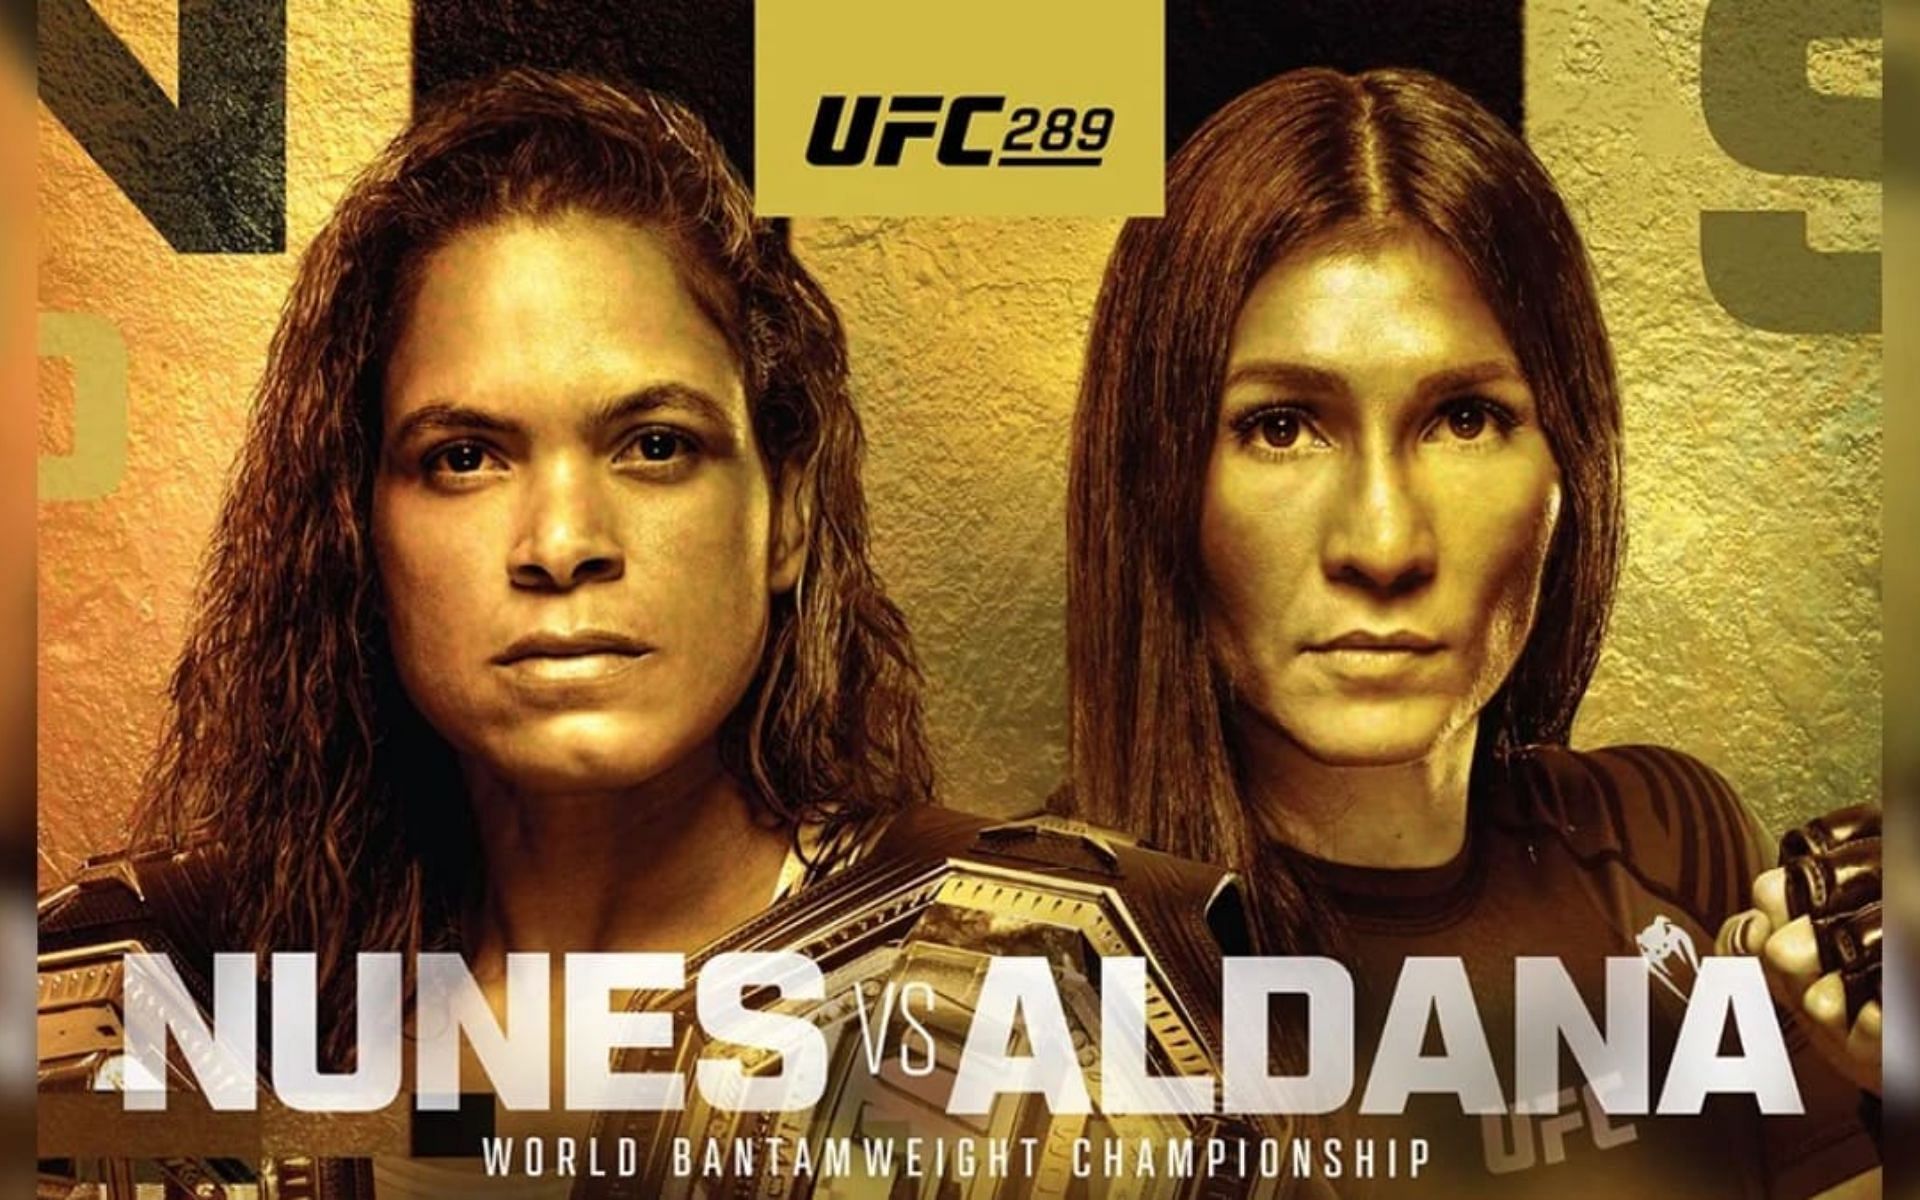 Amanda Nunes faces Irene Aldana in the headliner of UFC 289